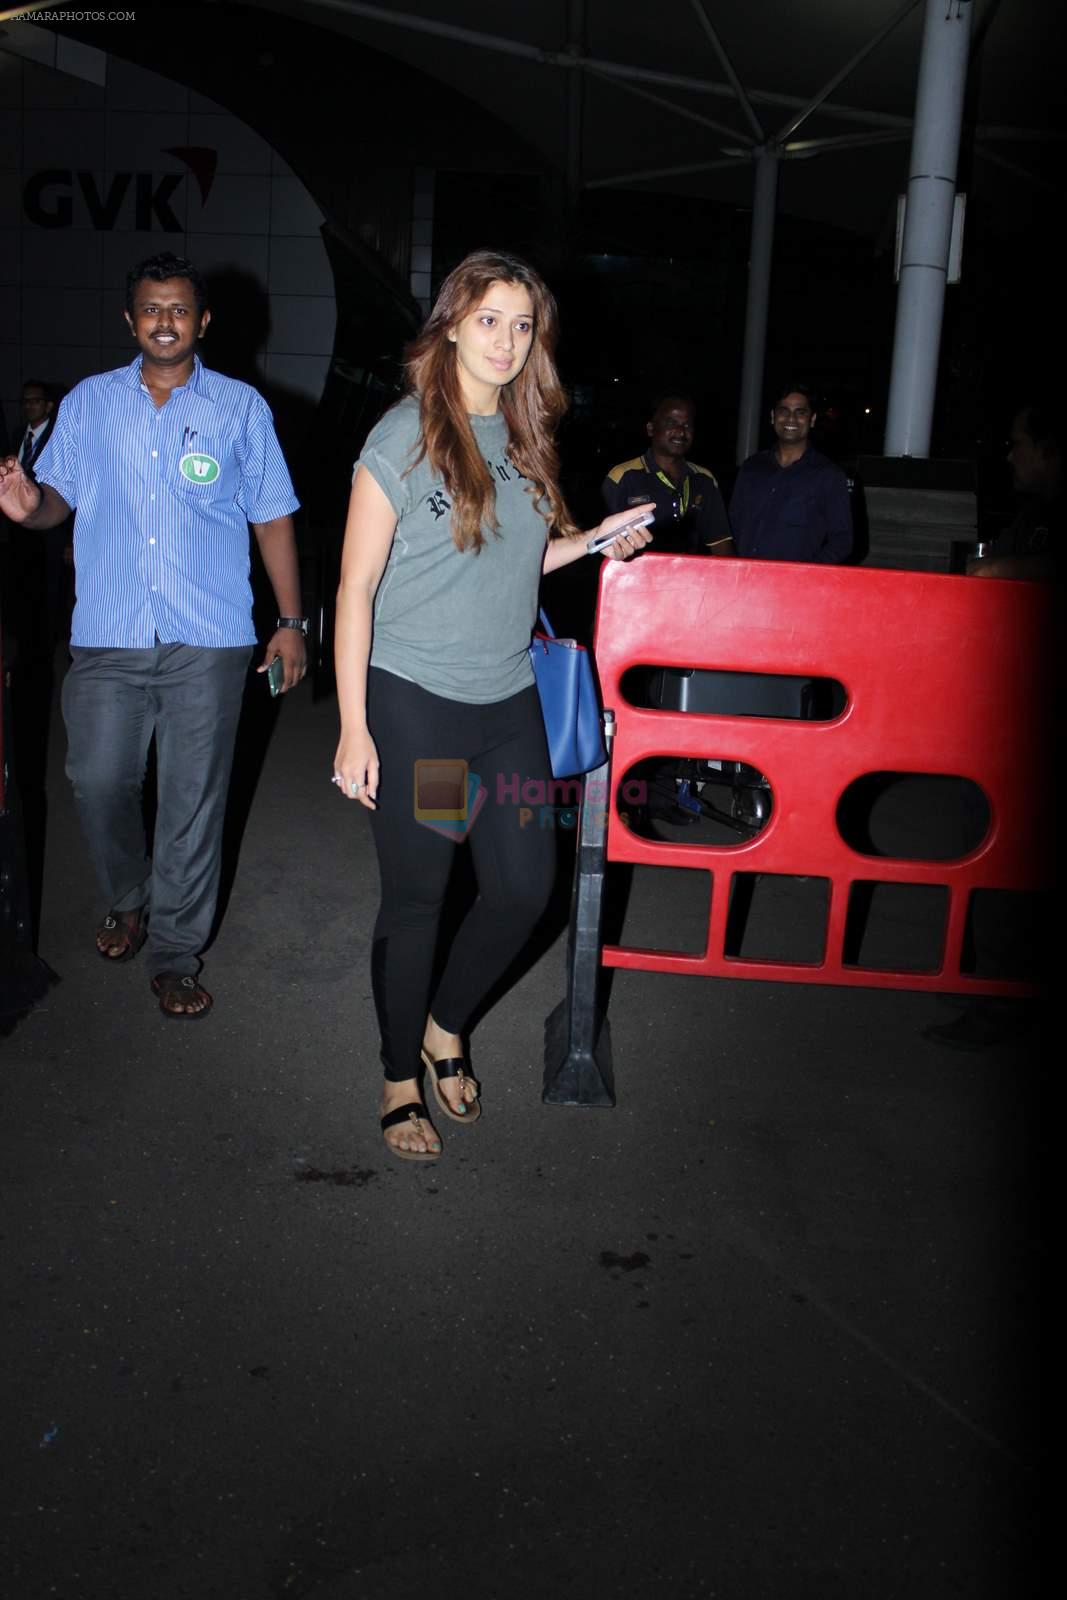 Laxmi Rai snapped at domestic airport in Mumbai on 2nd July 2015